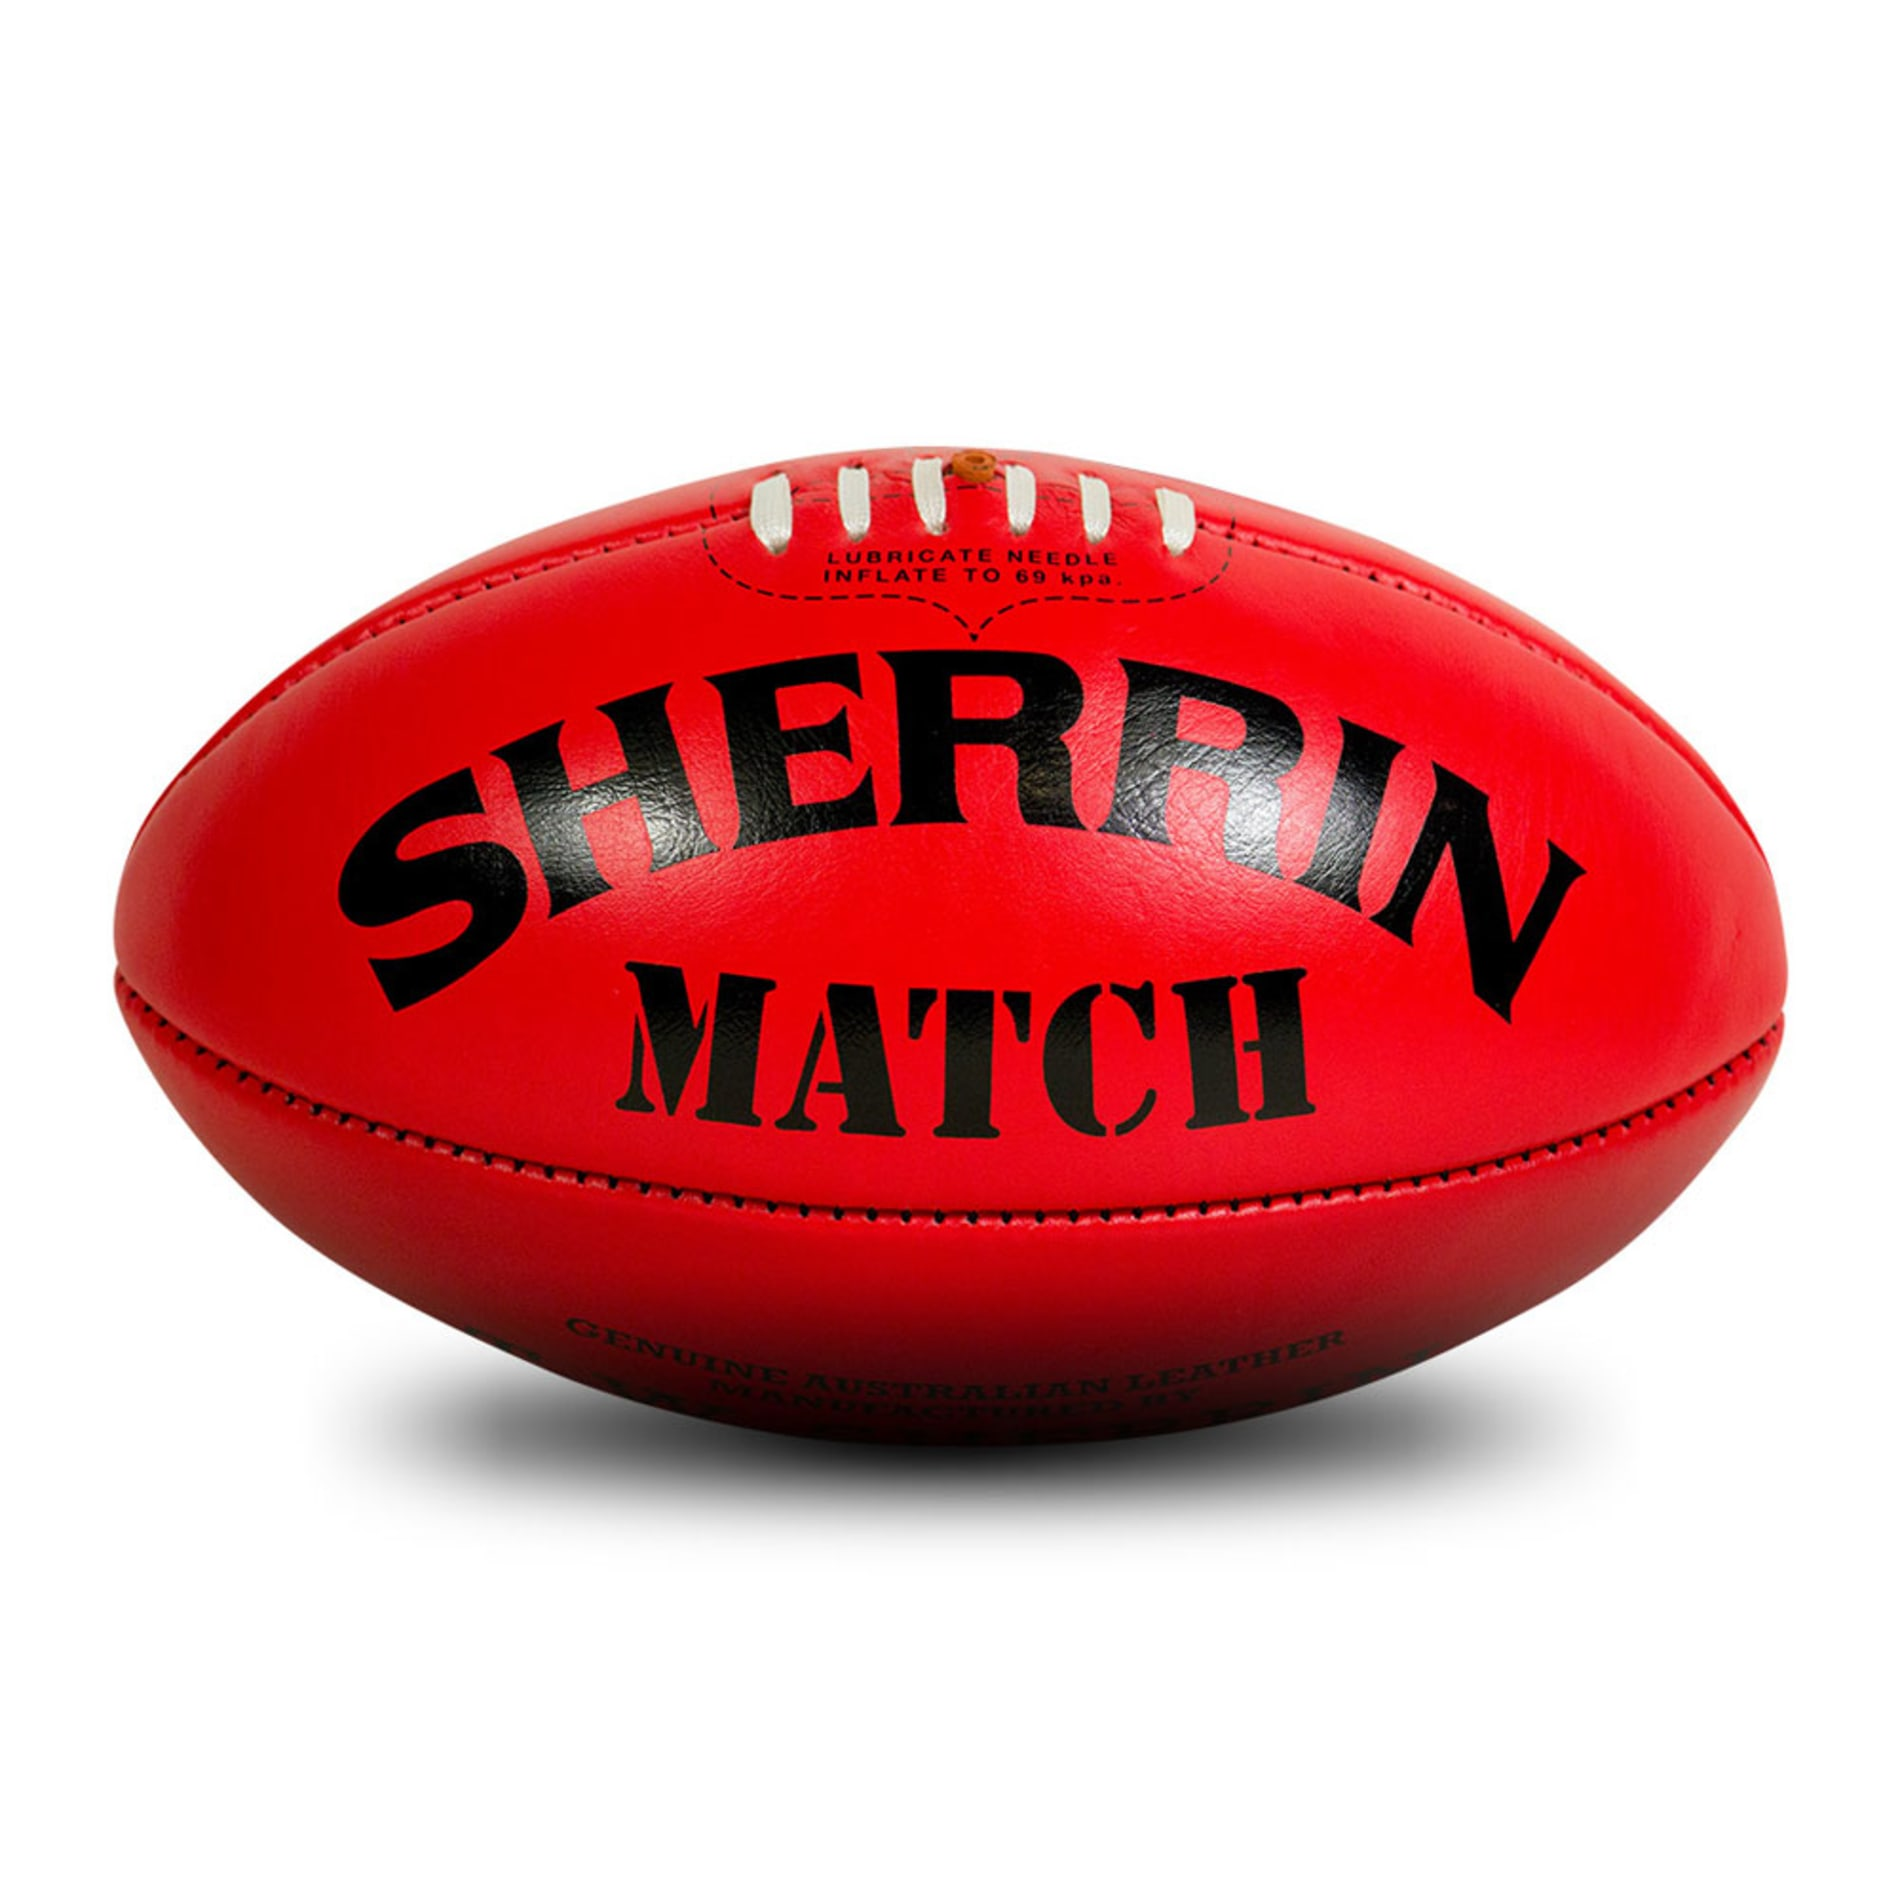 Sherrin Match Football